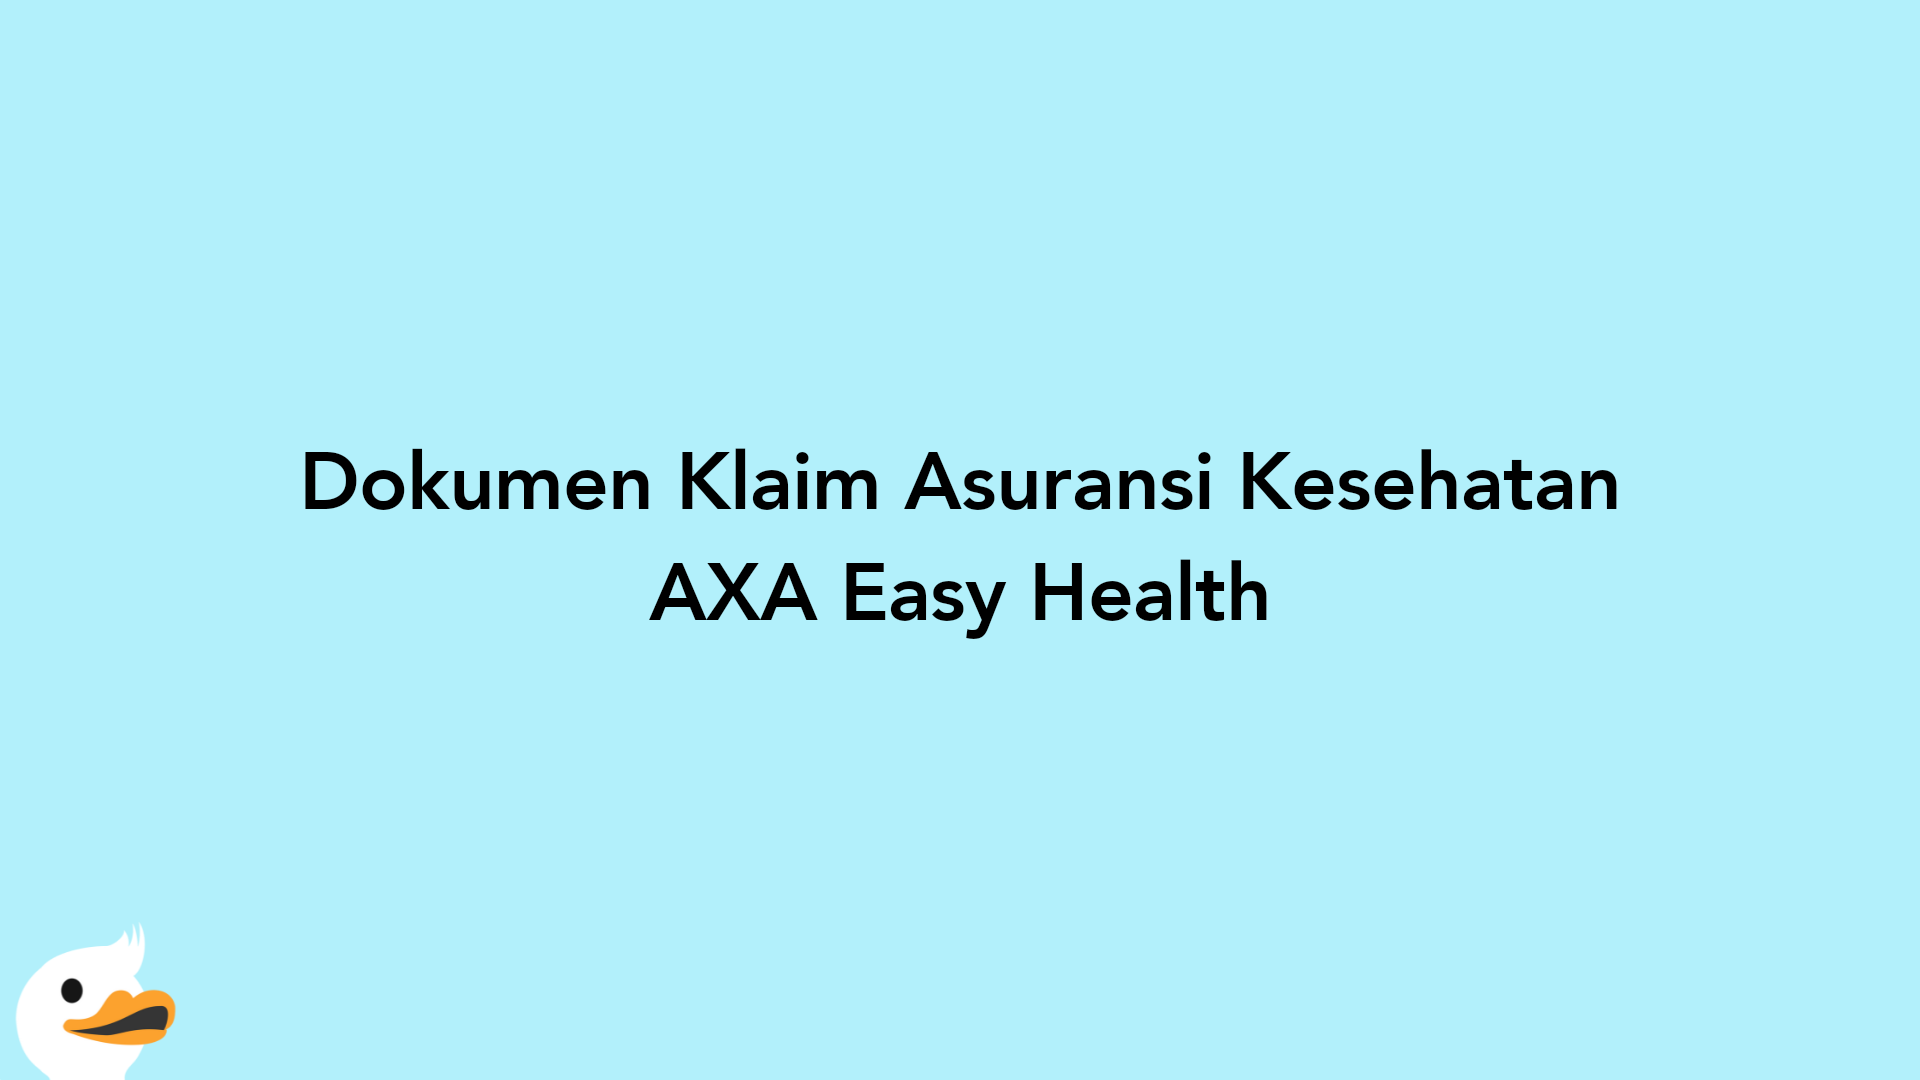 Dokumen Klaim Asuransi Kesehatan AXA Easy Health